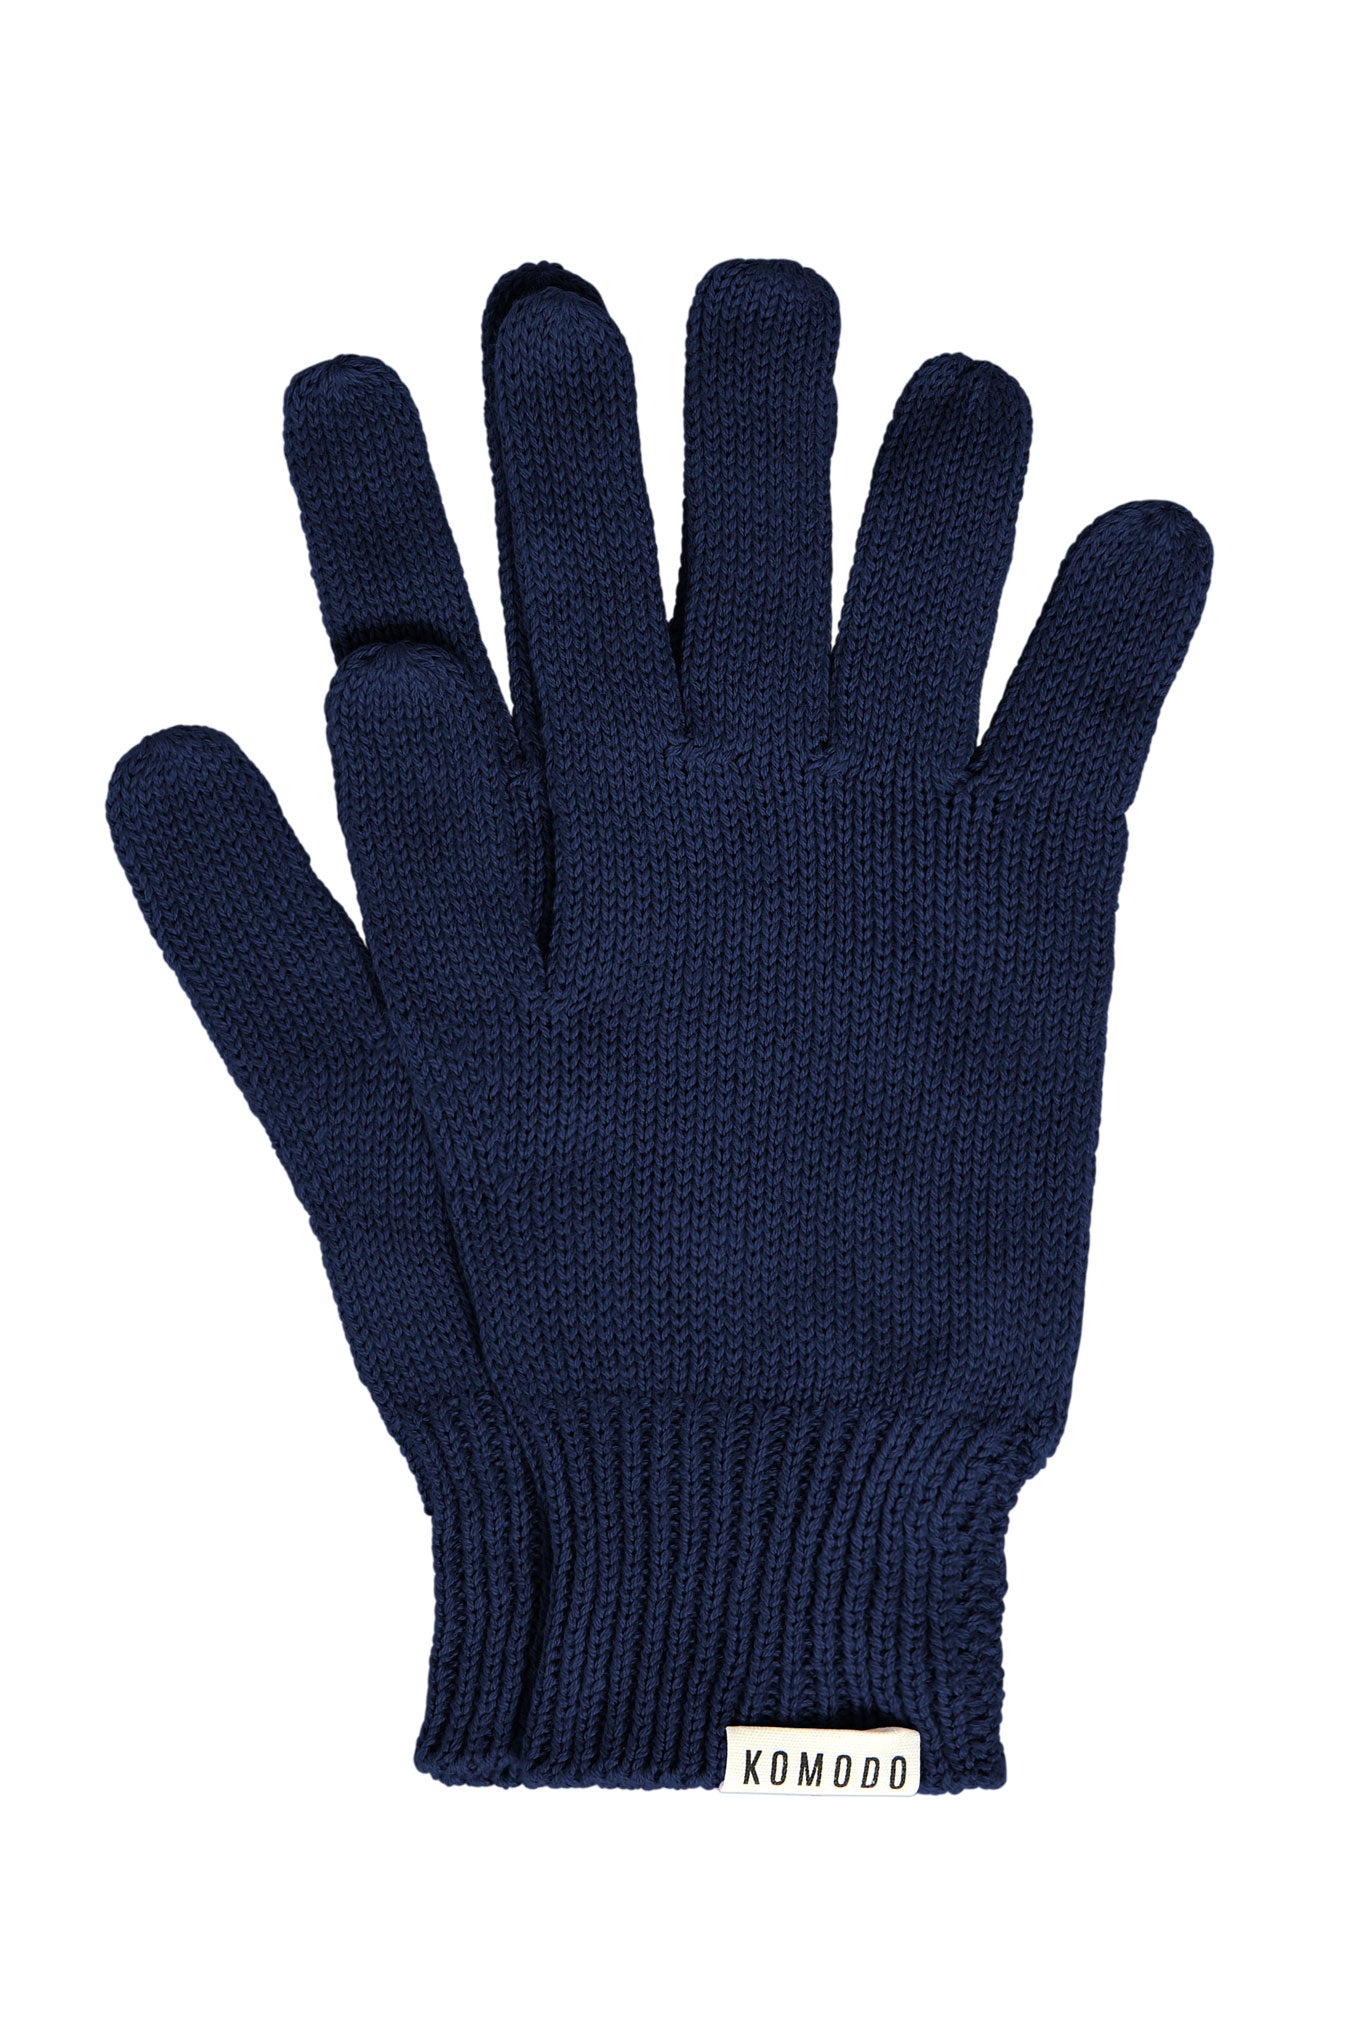 CITY - Organic Cotton Gloves Navy